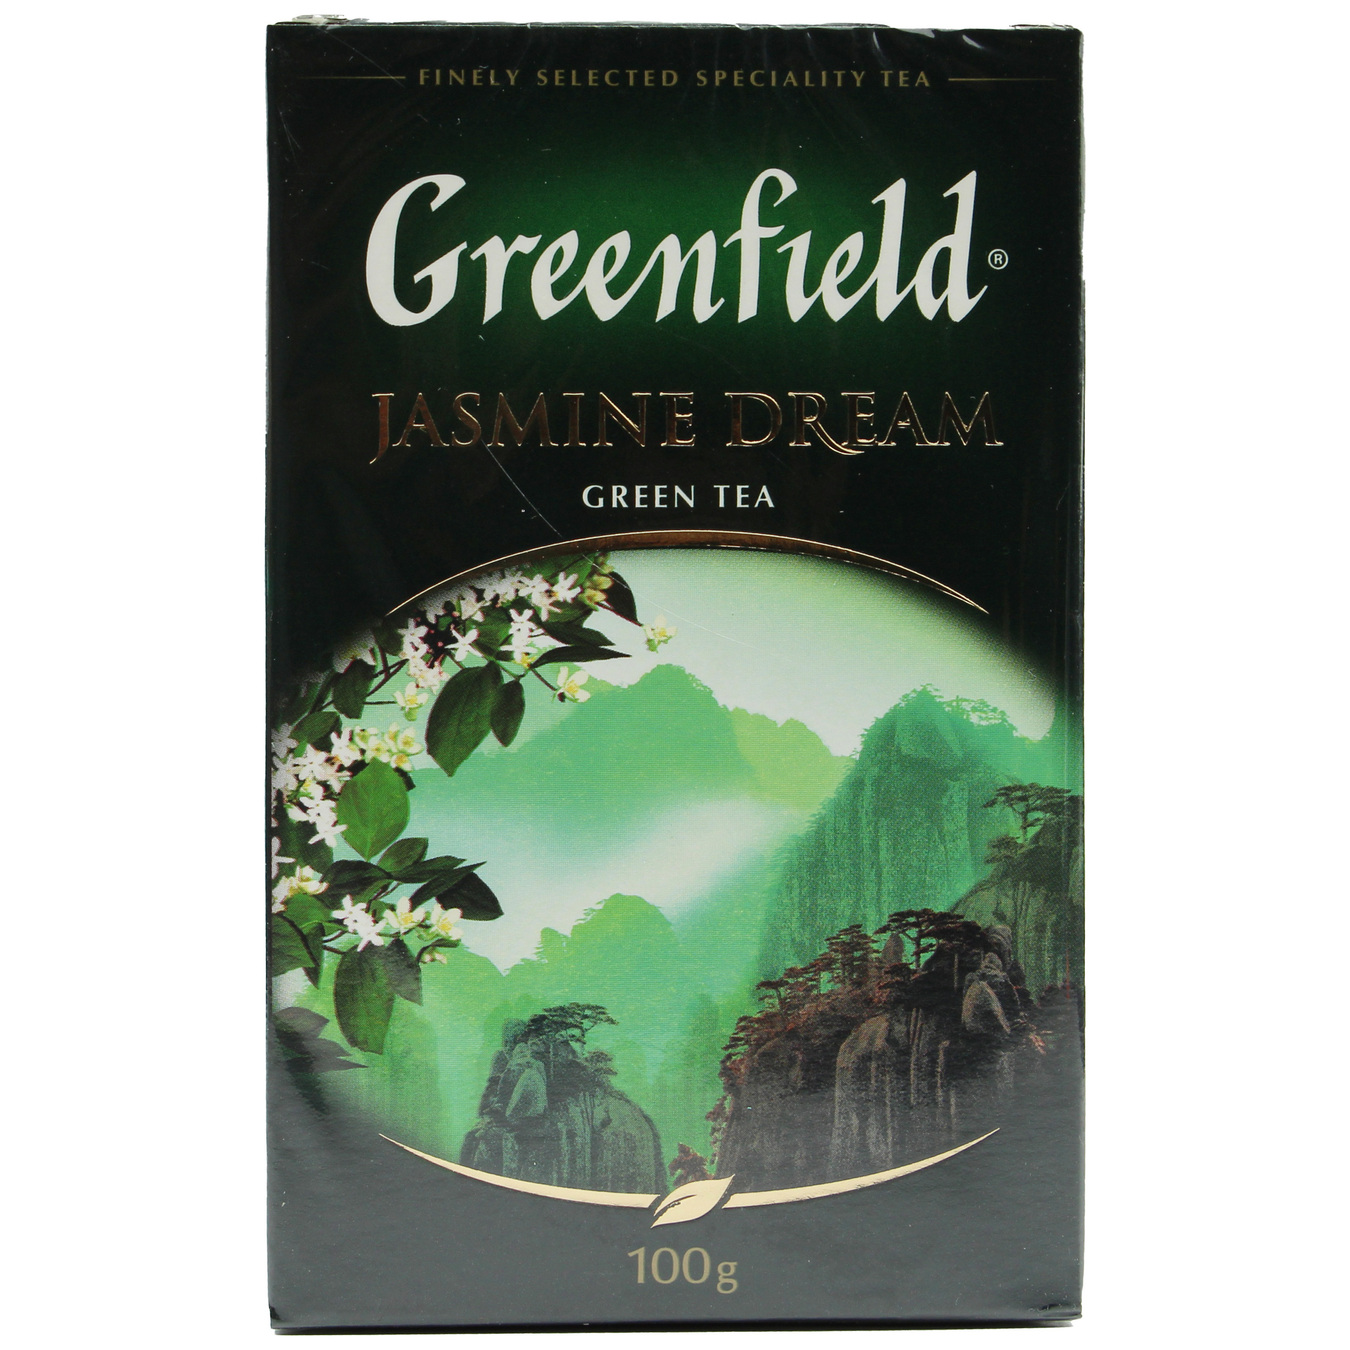 Greenfield Jasmine Dream 100g